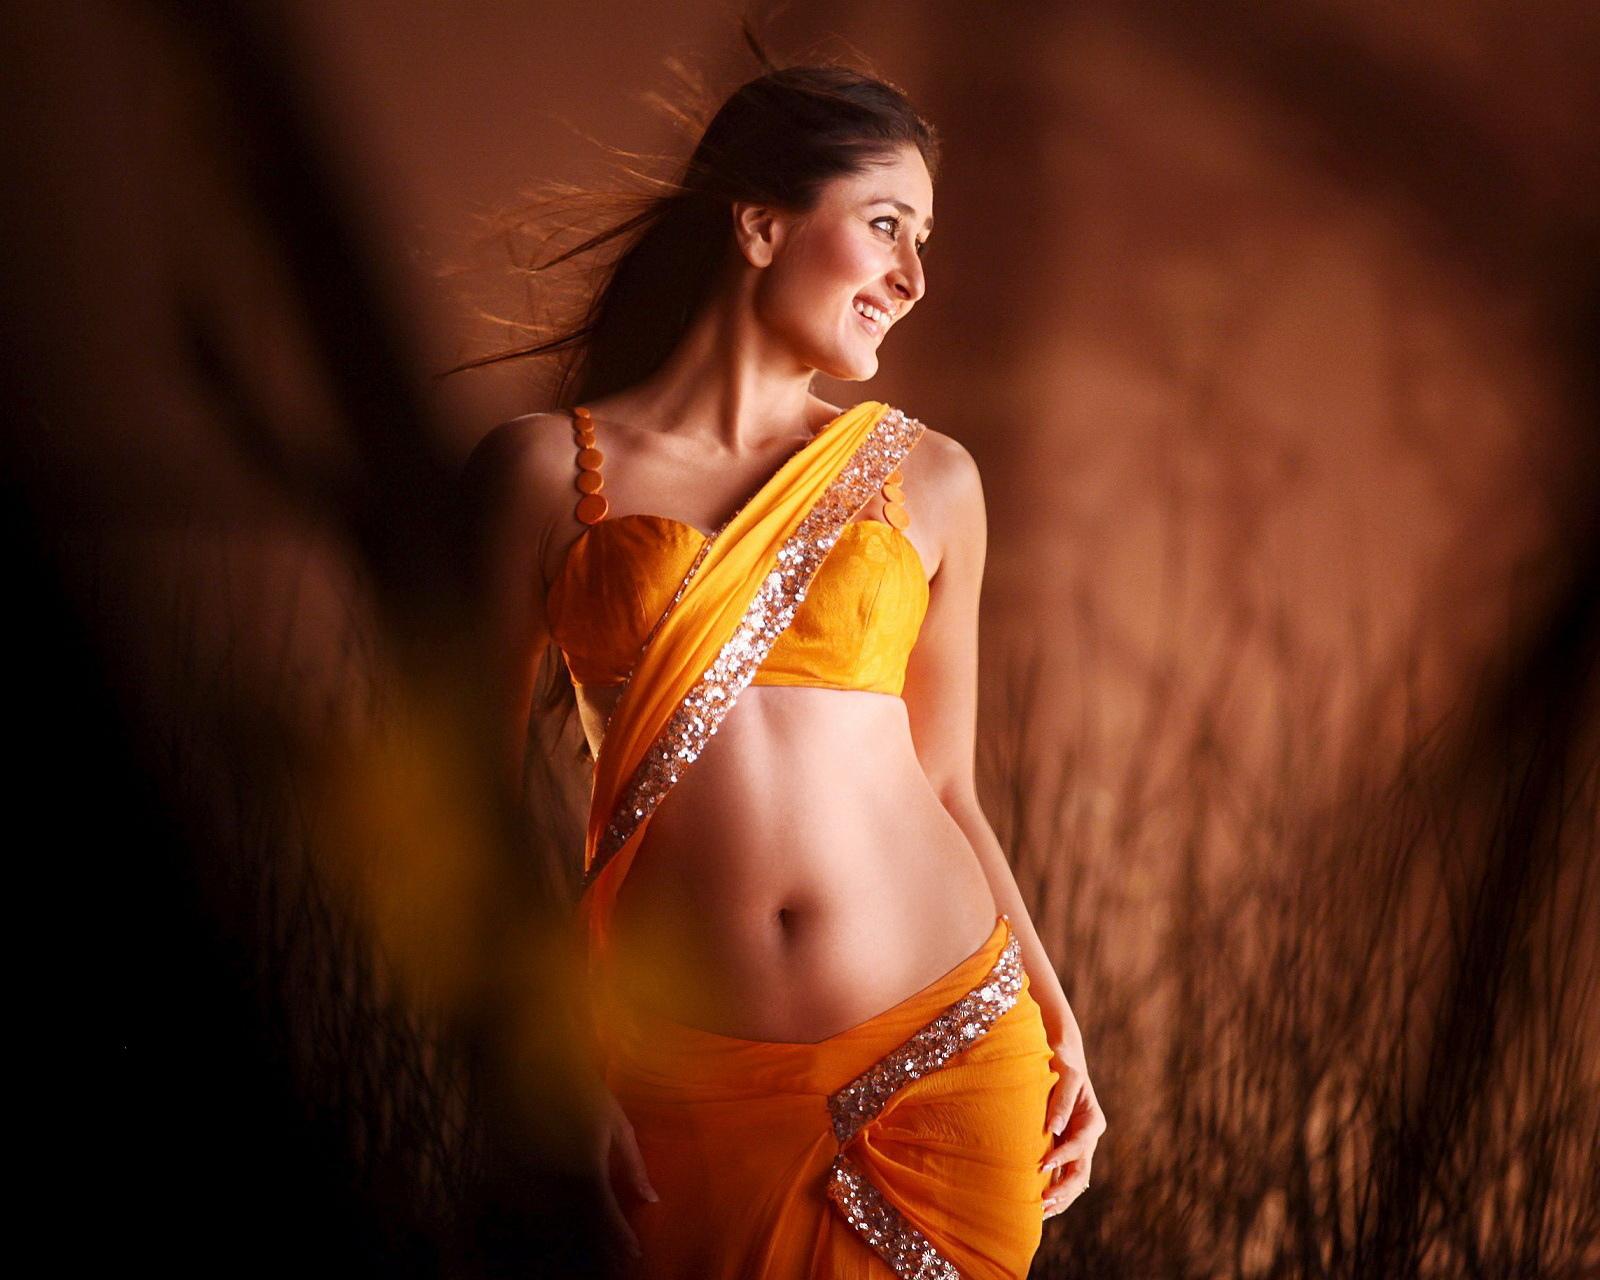 Kareena Kapoor at 640 x 1136 iPhone 5 size wallpapers HD quality